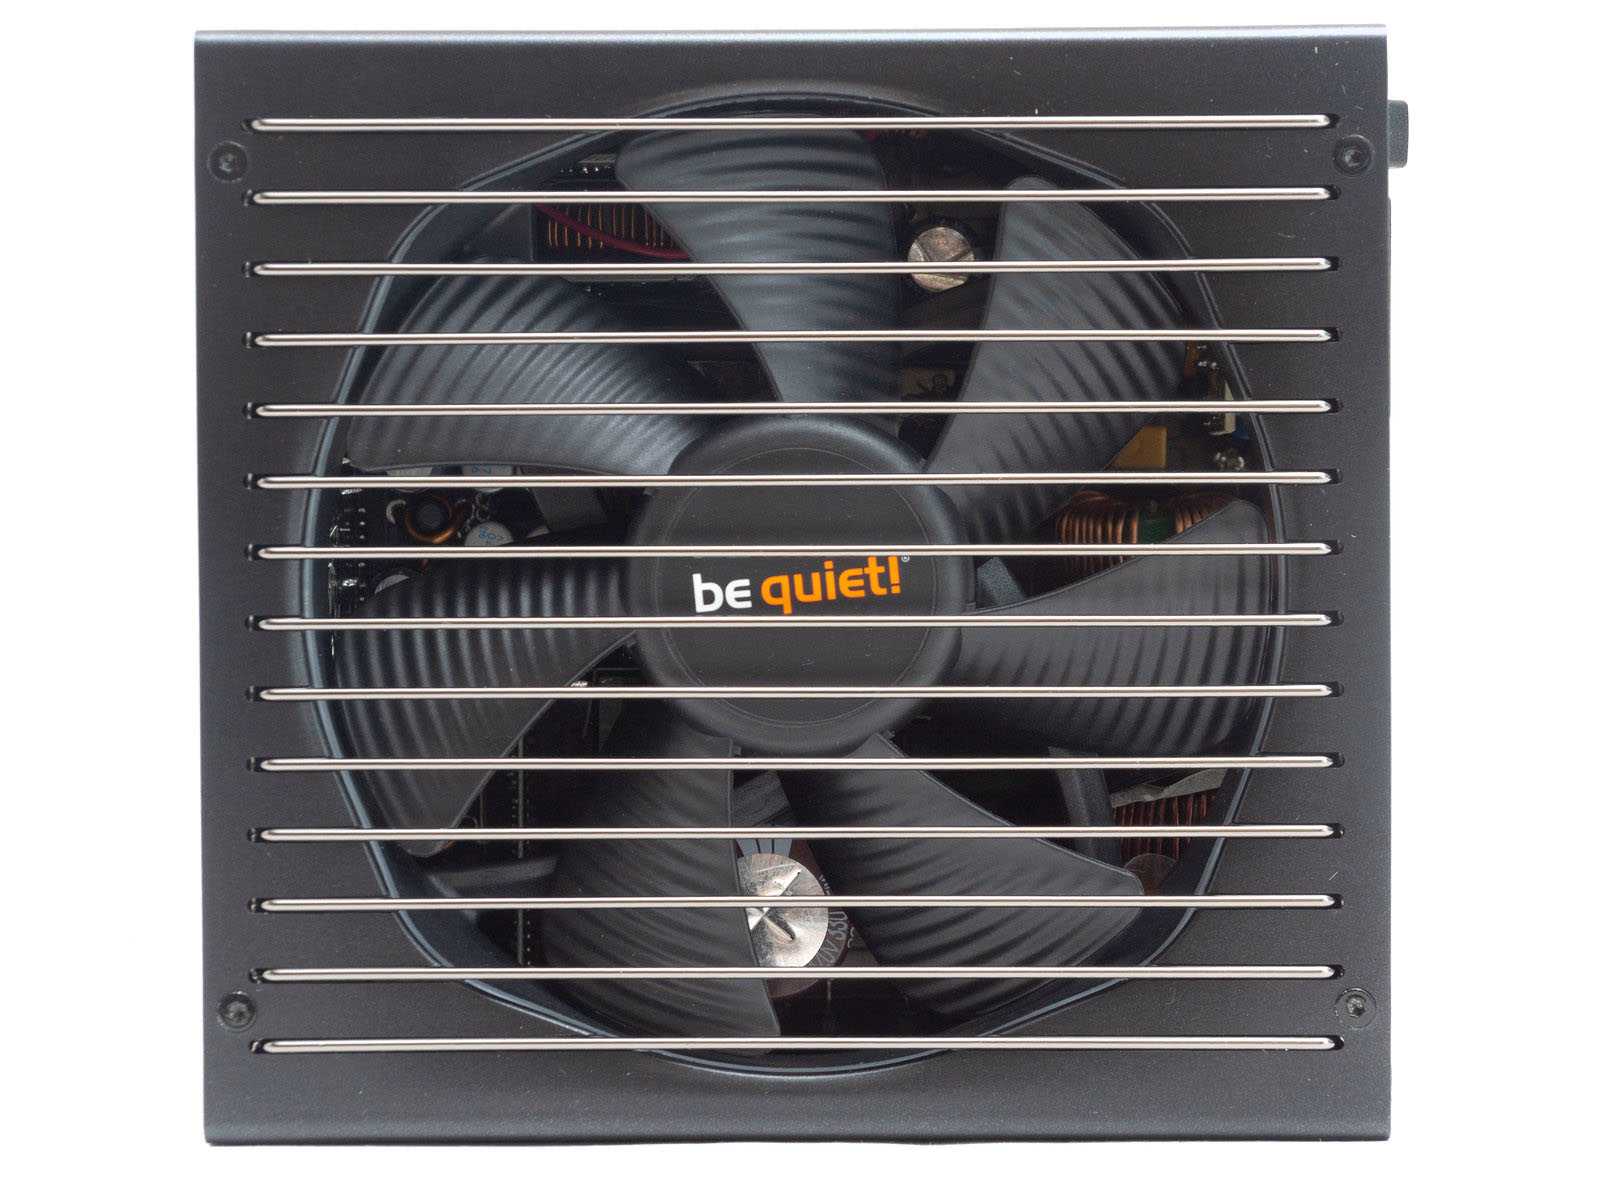 Be quiet straight power 12. Be quiet straight Power 11 750w. Be quiet! Straight Power 11 Platinum 750w. Be quiet straight Power 11 750w как подключить. Be quiet straight p8/p4.